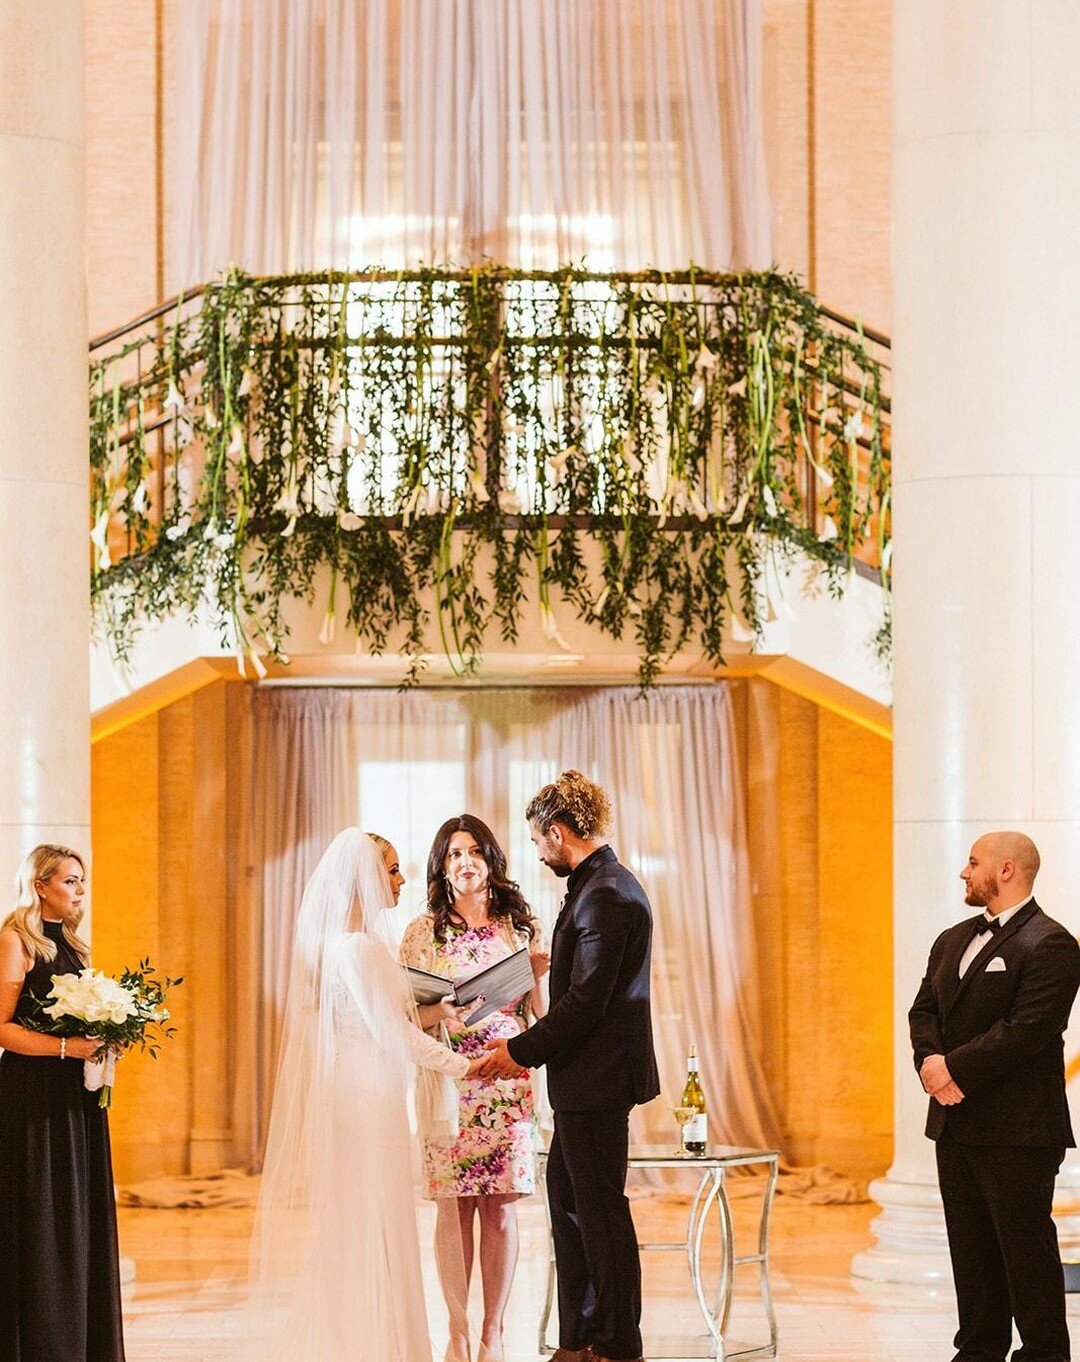 I do &hellip;today and forever❤️

Photographer: @cyeetheworld
Florist: @henrys_place
Venue: @bentlyreserve

#weddingceremony #fabulous #weddingflorist
#bayareaweddingplanner #weddingplanner #realwedding
#wedding #weddingday #bride #instabride #groom 